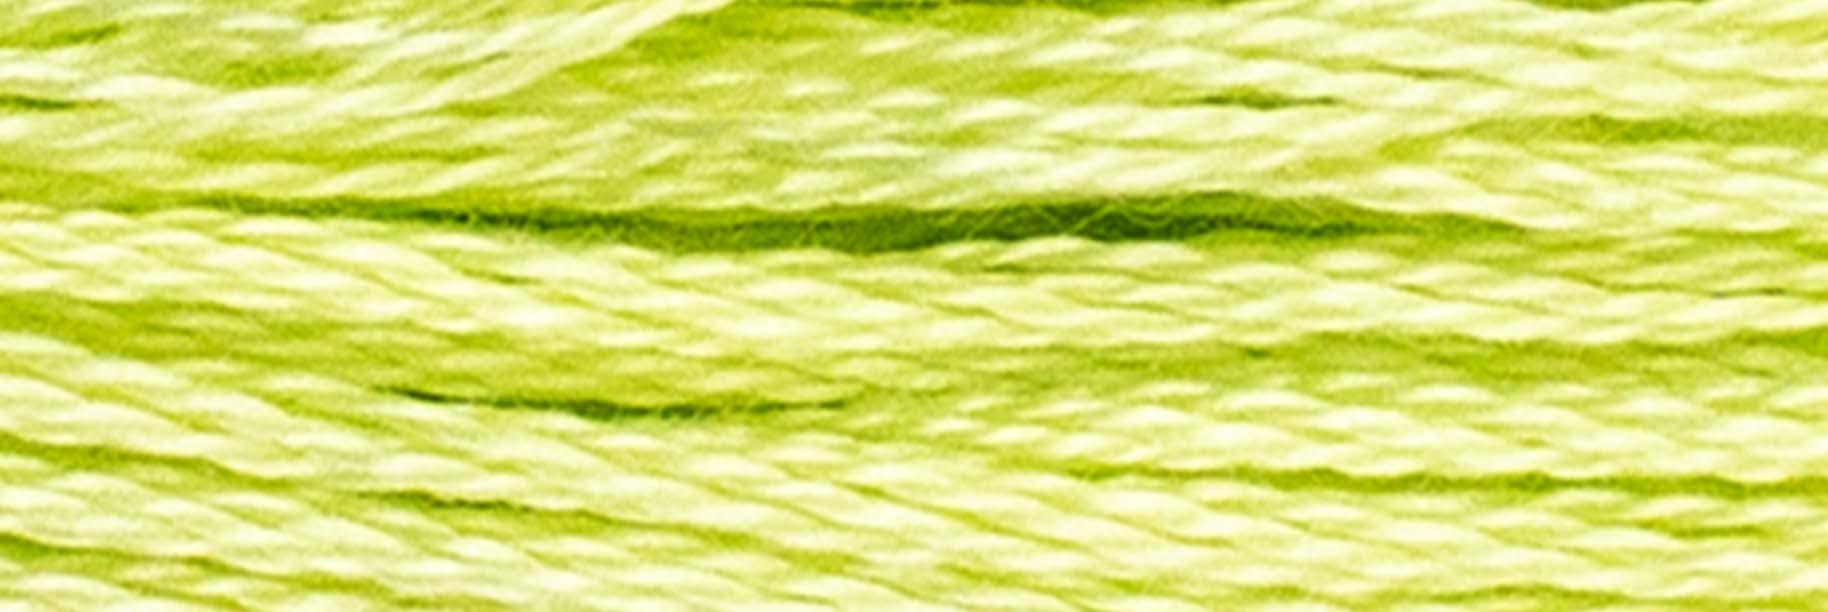 Stranded Cotton Luca-S - 287 / DMC 15 / Anchor 253 - Luca-S Stranded Cotton